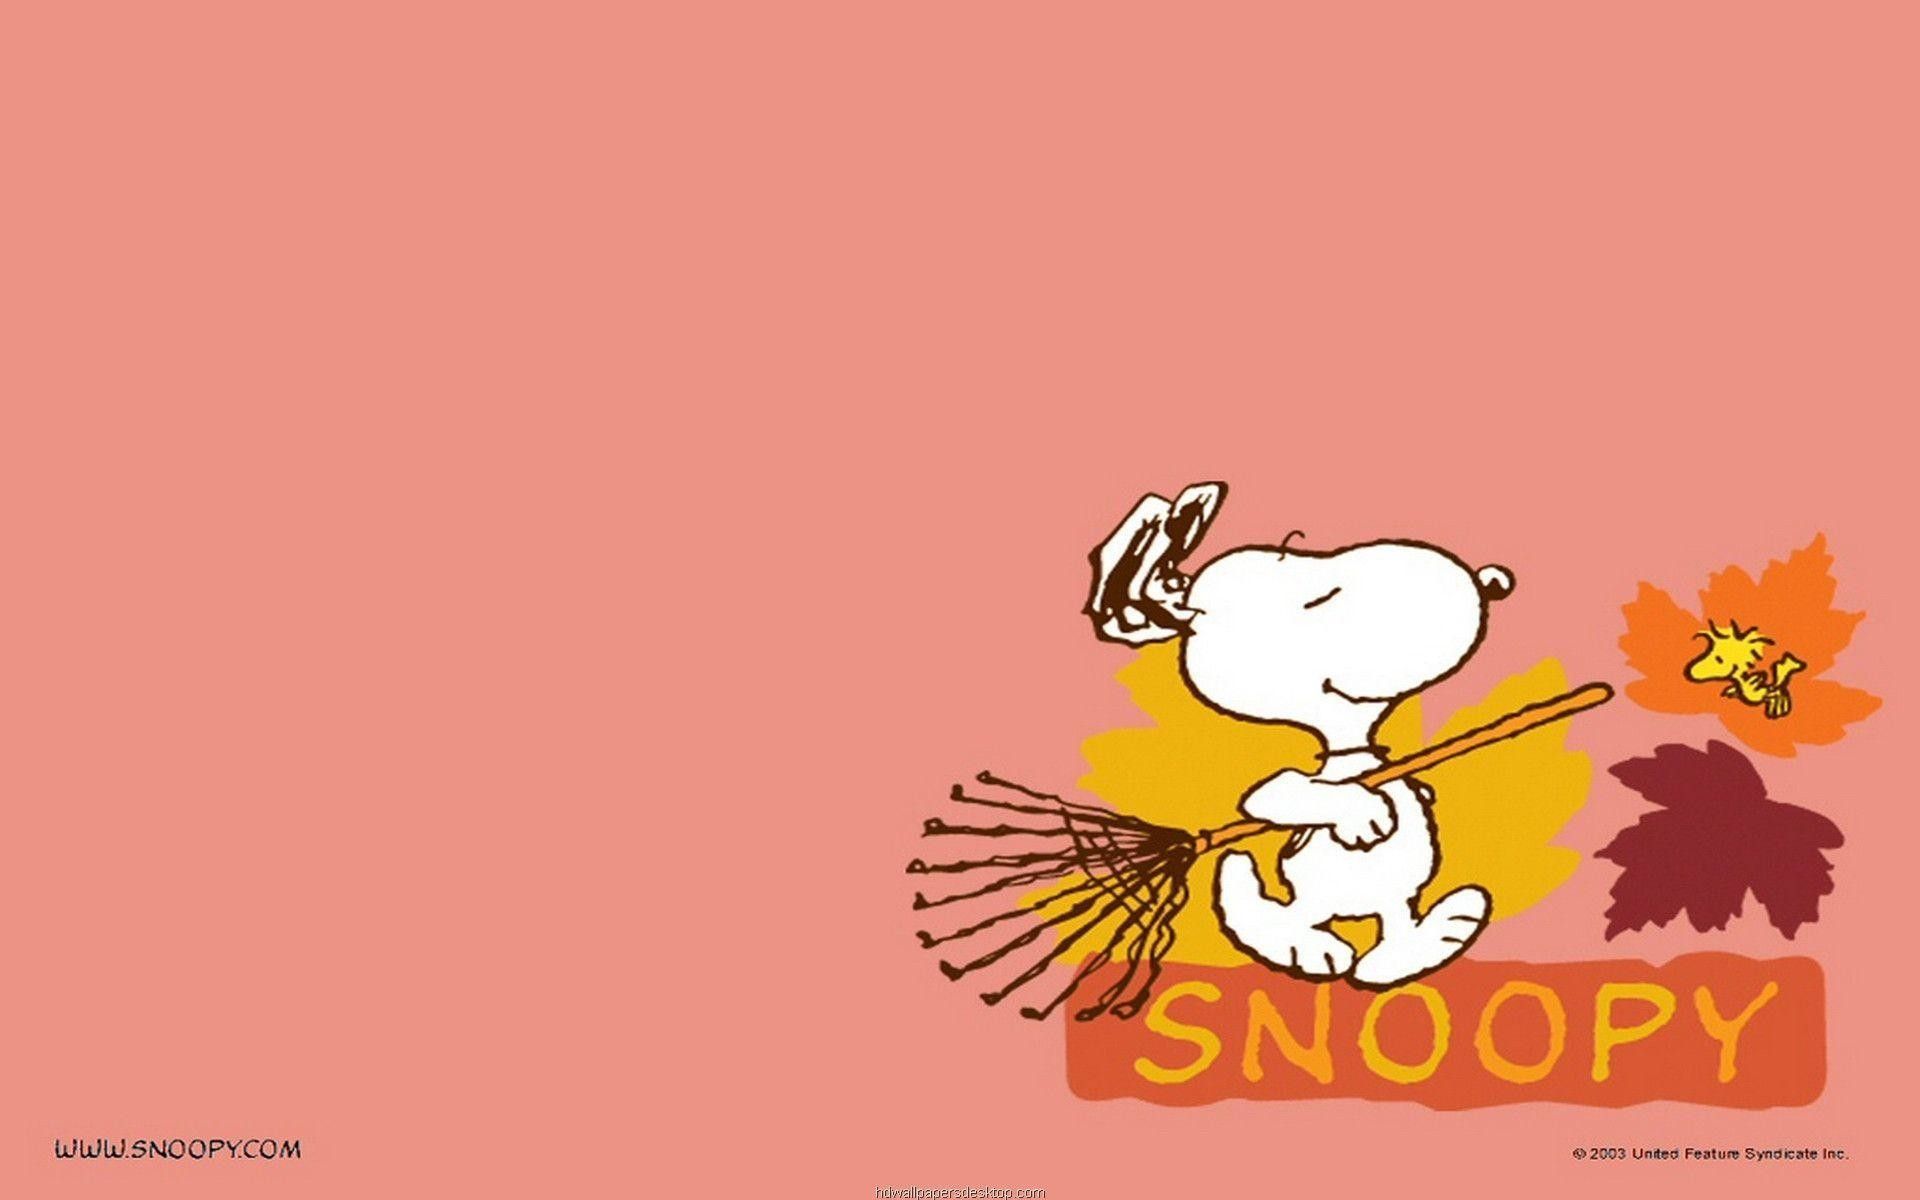 Snoopy wallpaper for desktop - Snoopy